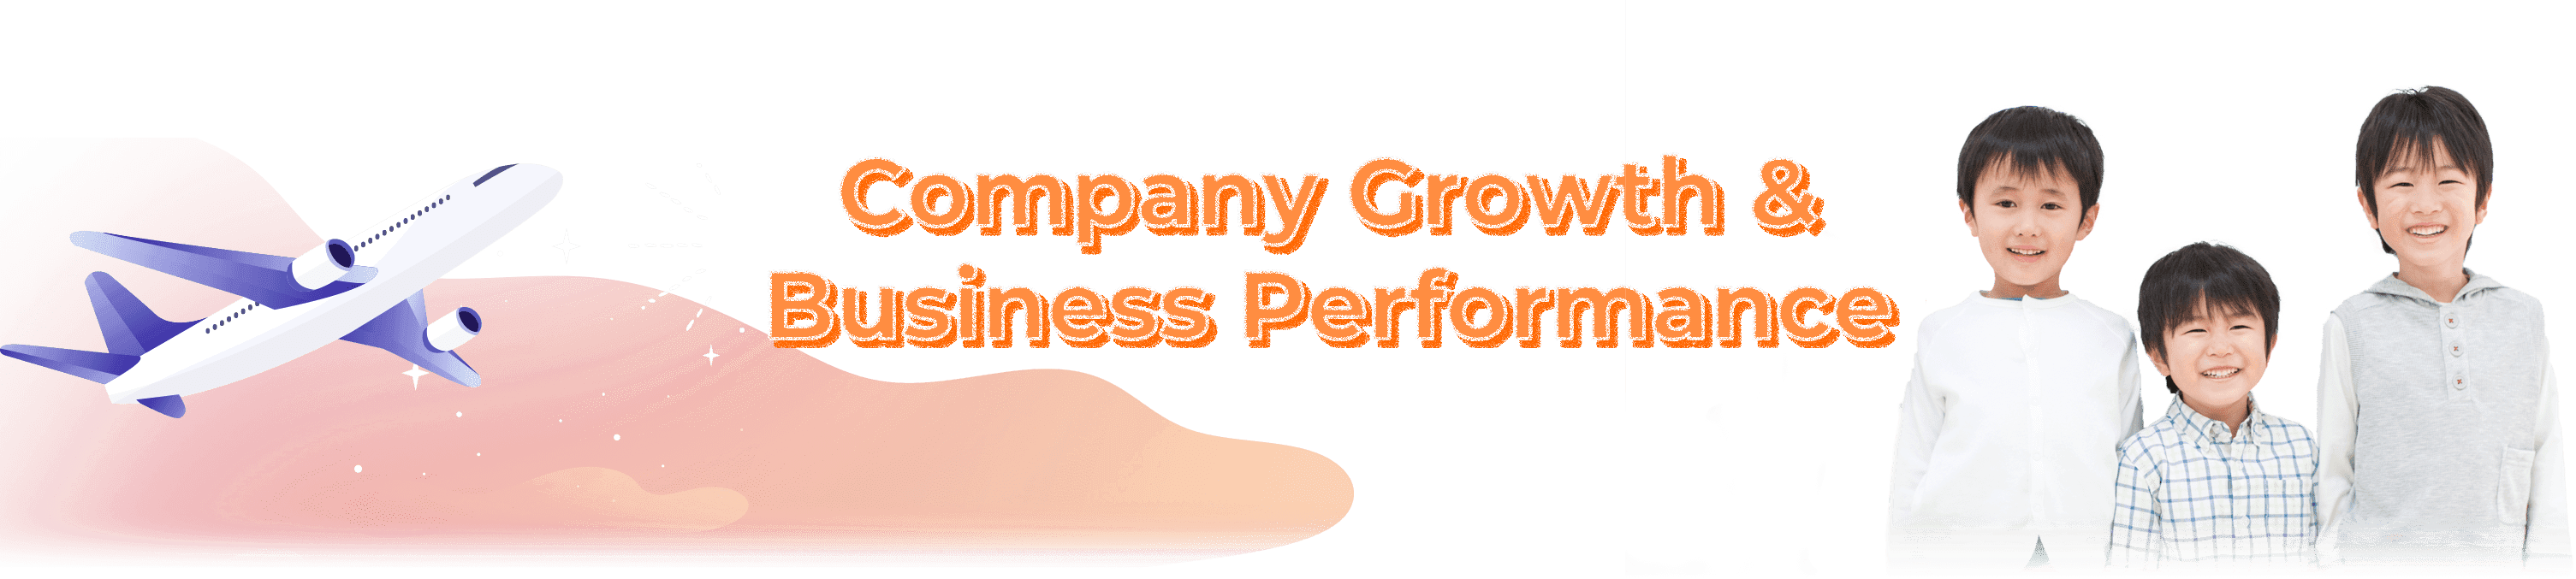 Company Growth & Business Performance